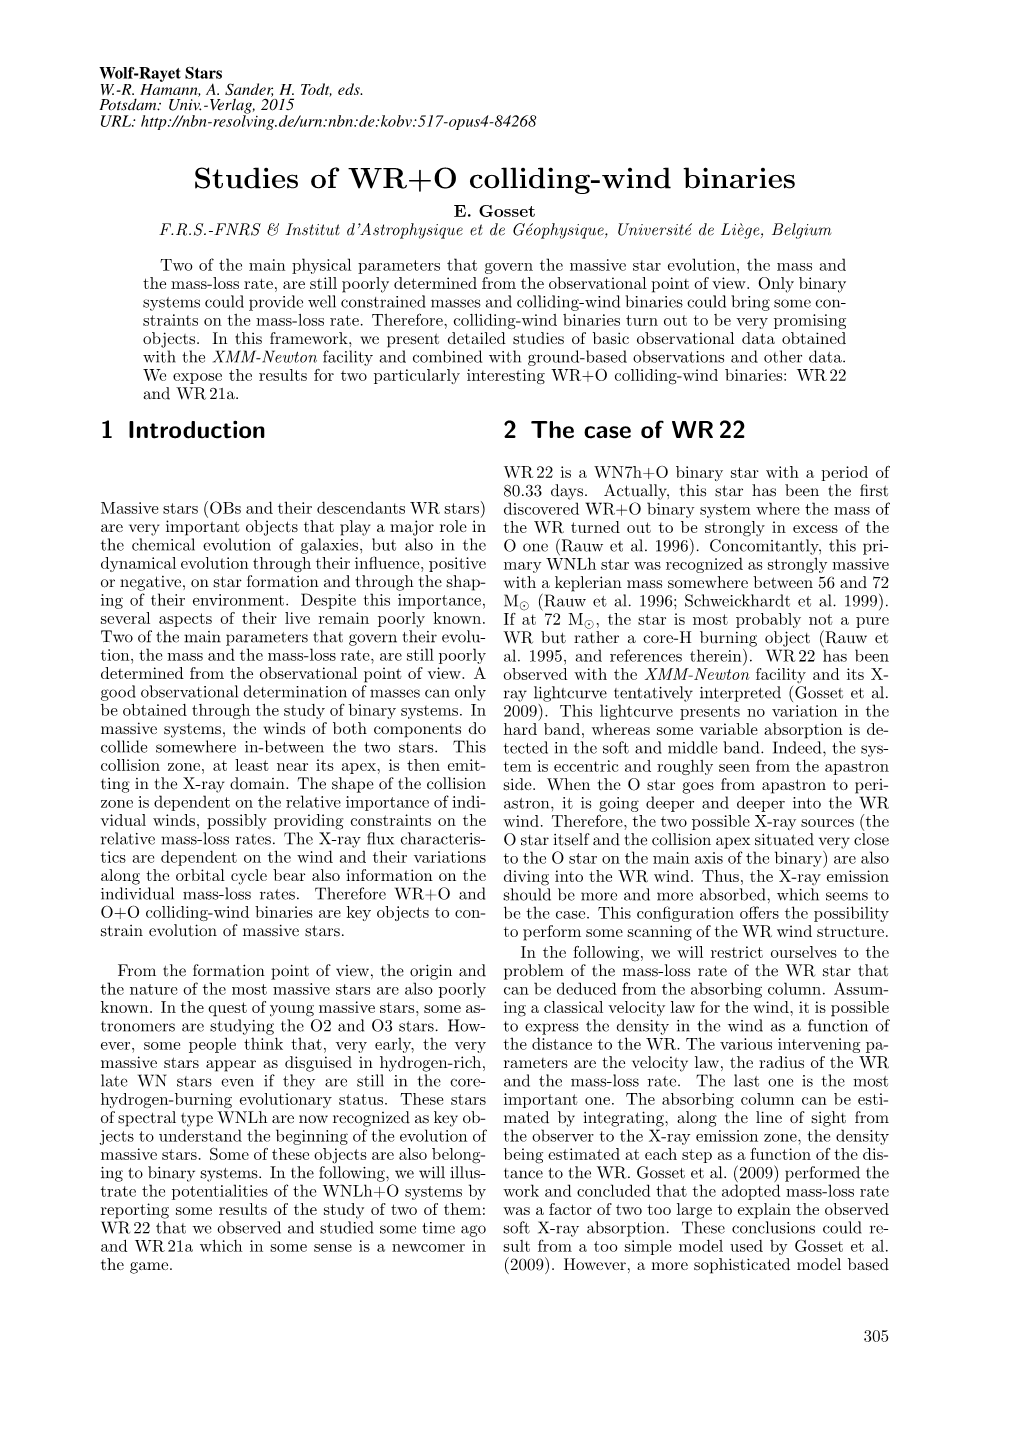 Studies of WR+O Colliding-Wind Binaries E